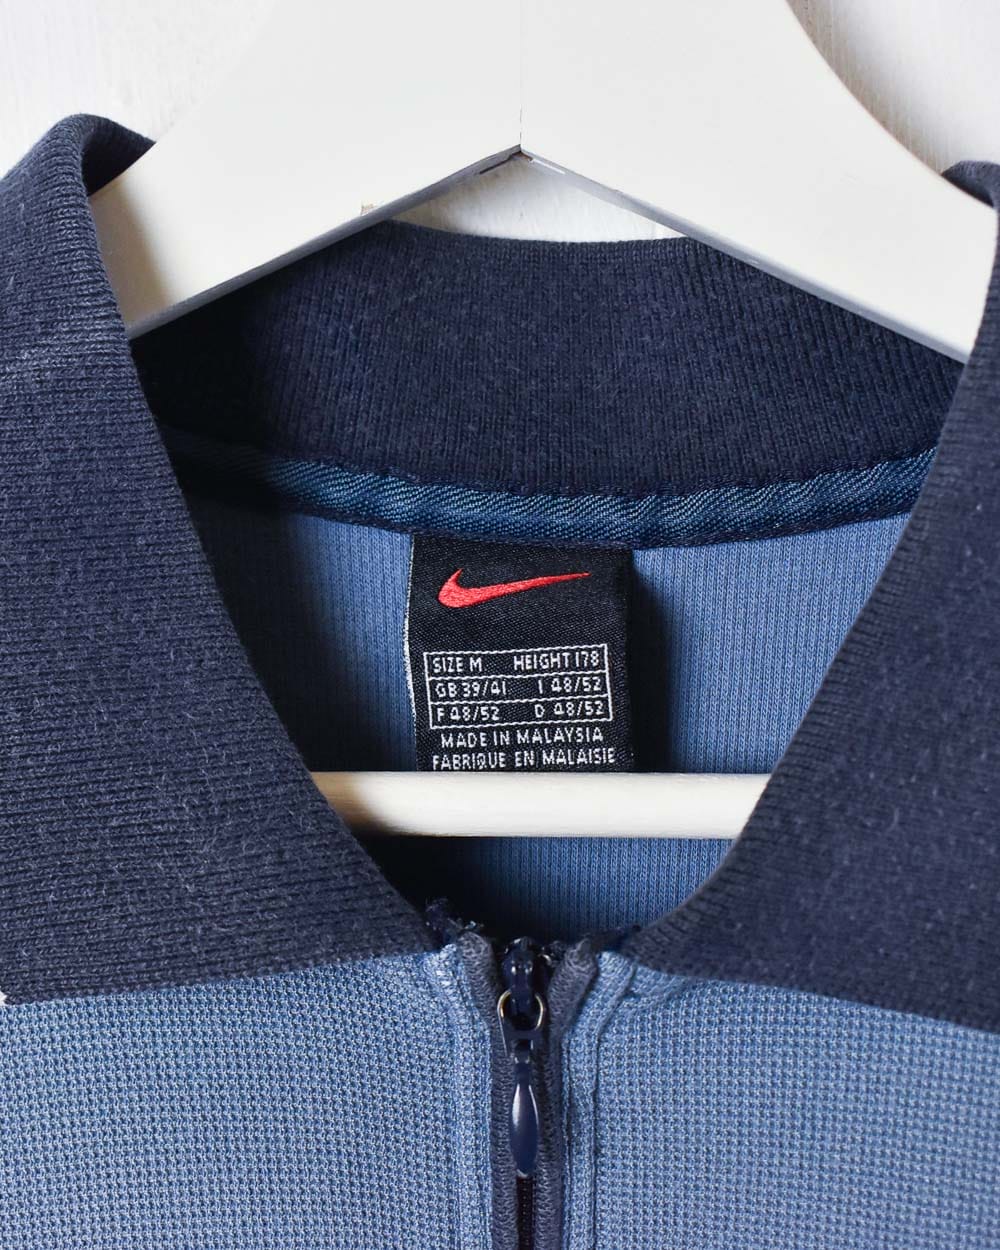 Blue Nike 1/4 Zip Polo Shirt - Medium